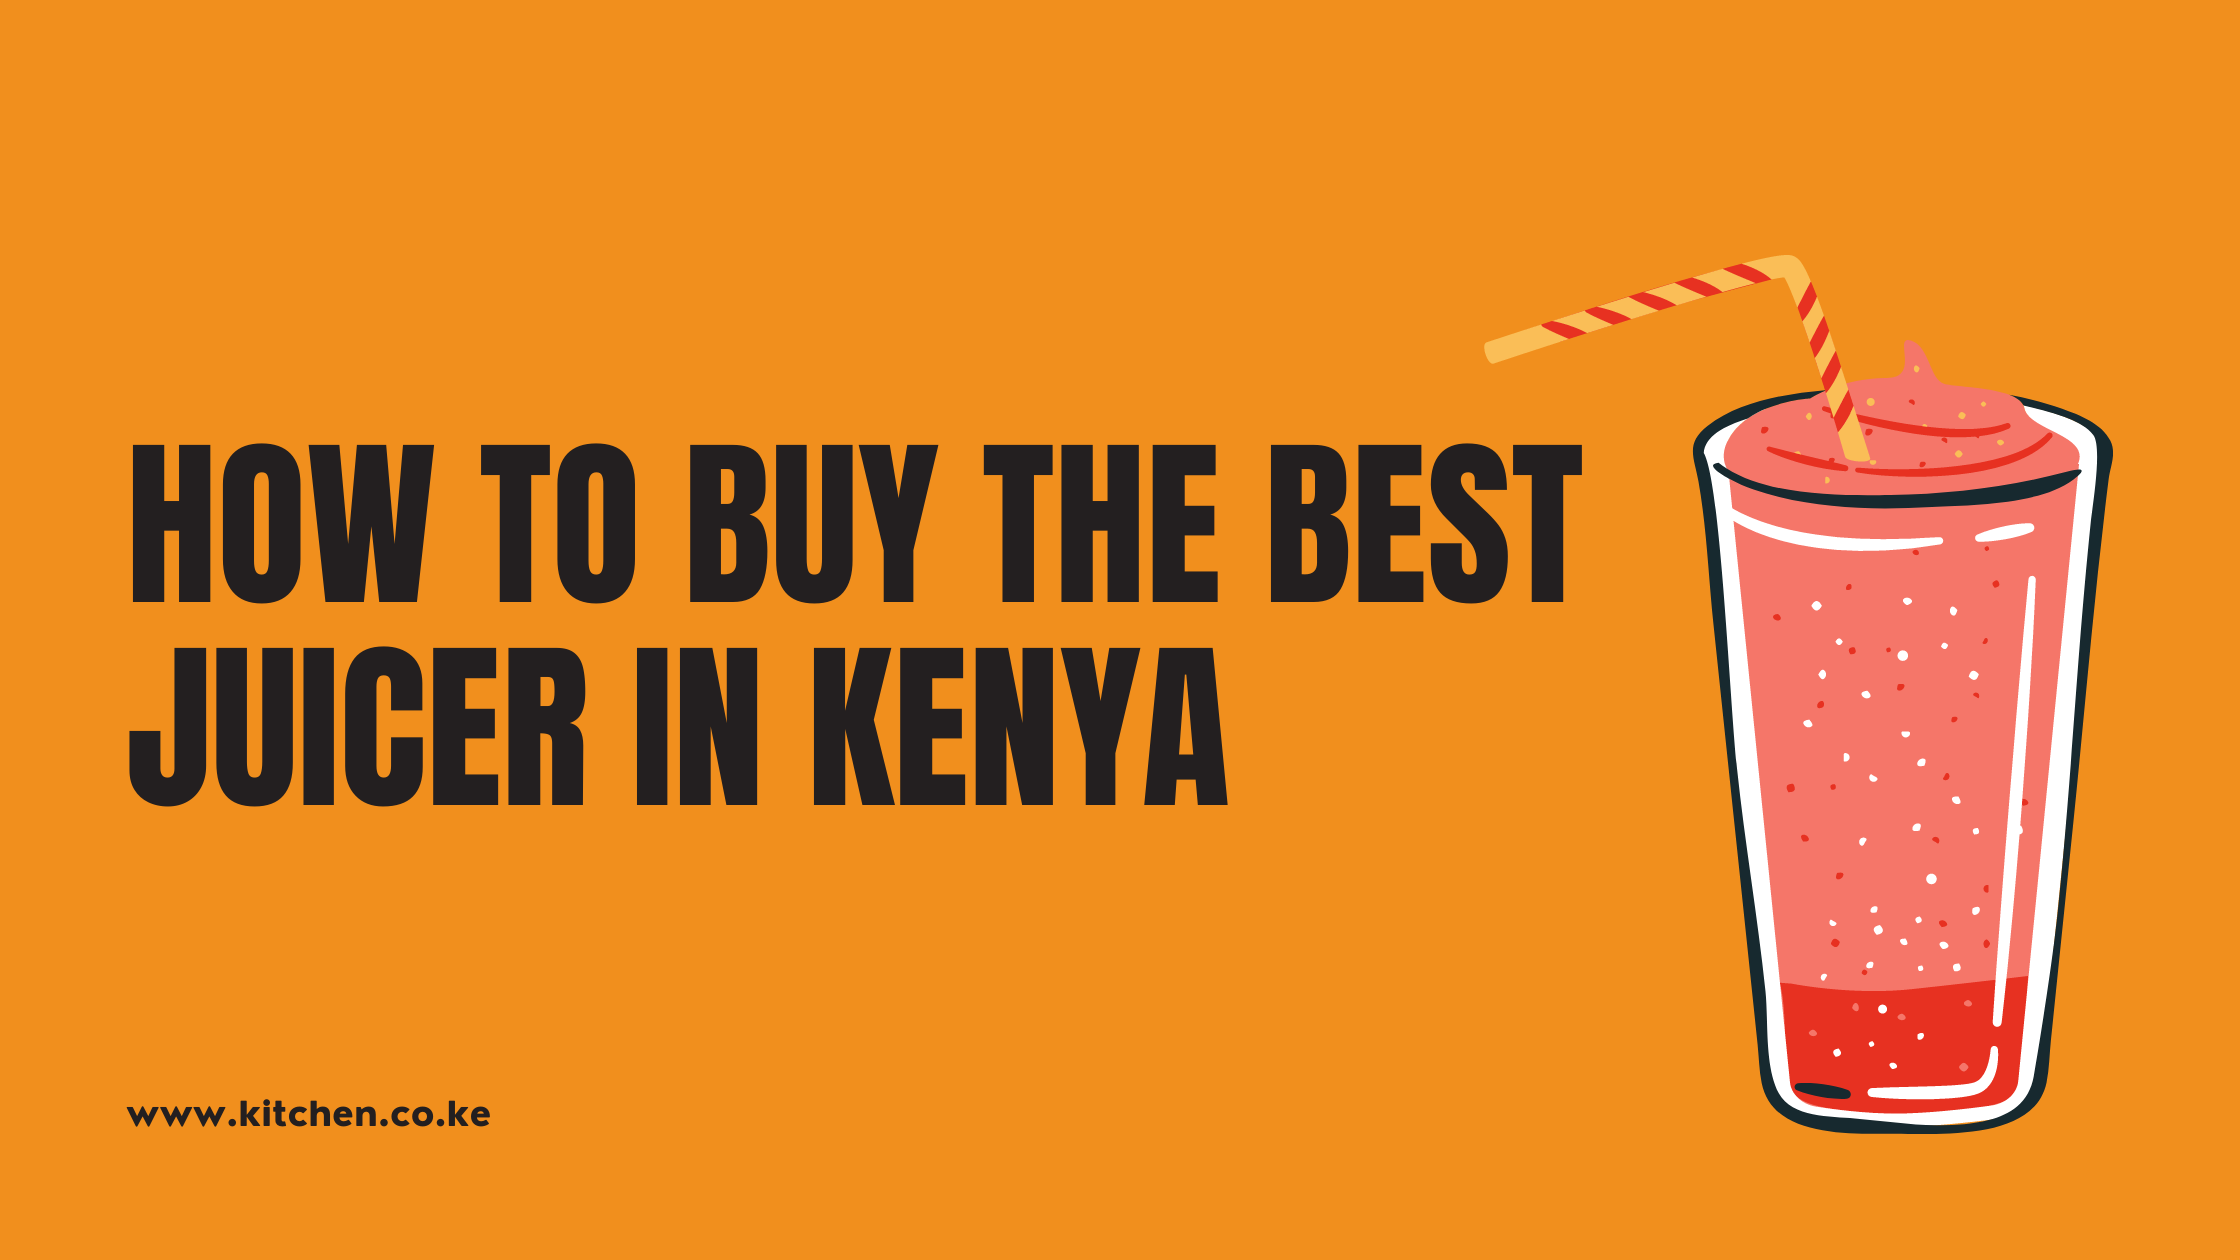 HOW TO BUY THE BEST JUICER IN KENYA